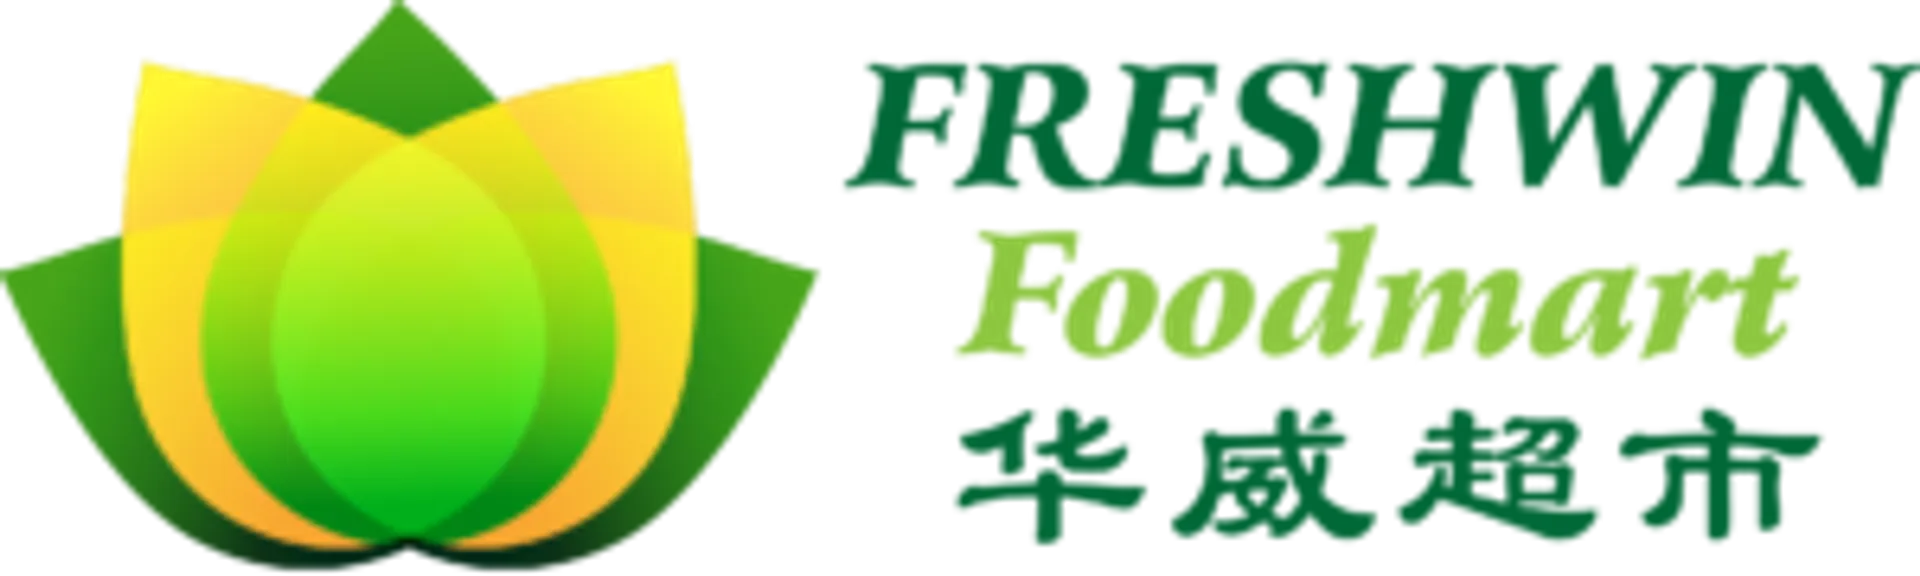 FRESH WIN FOODMART logo of current flyer